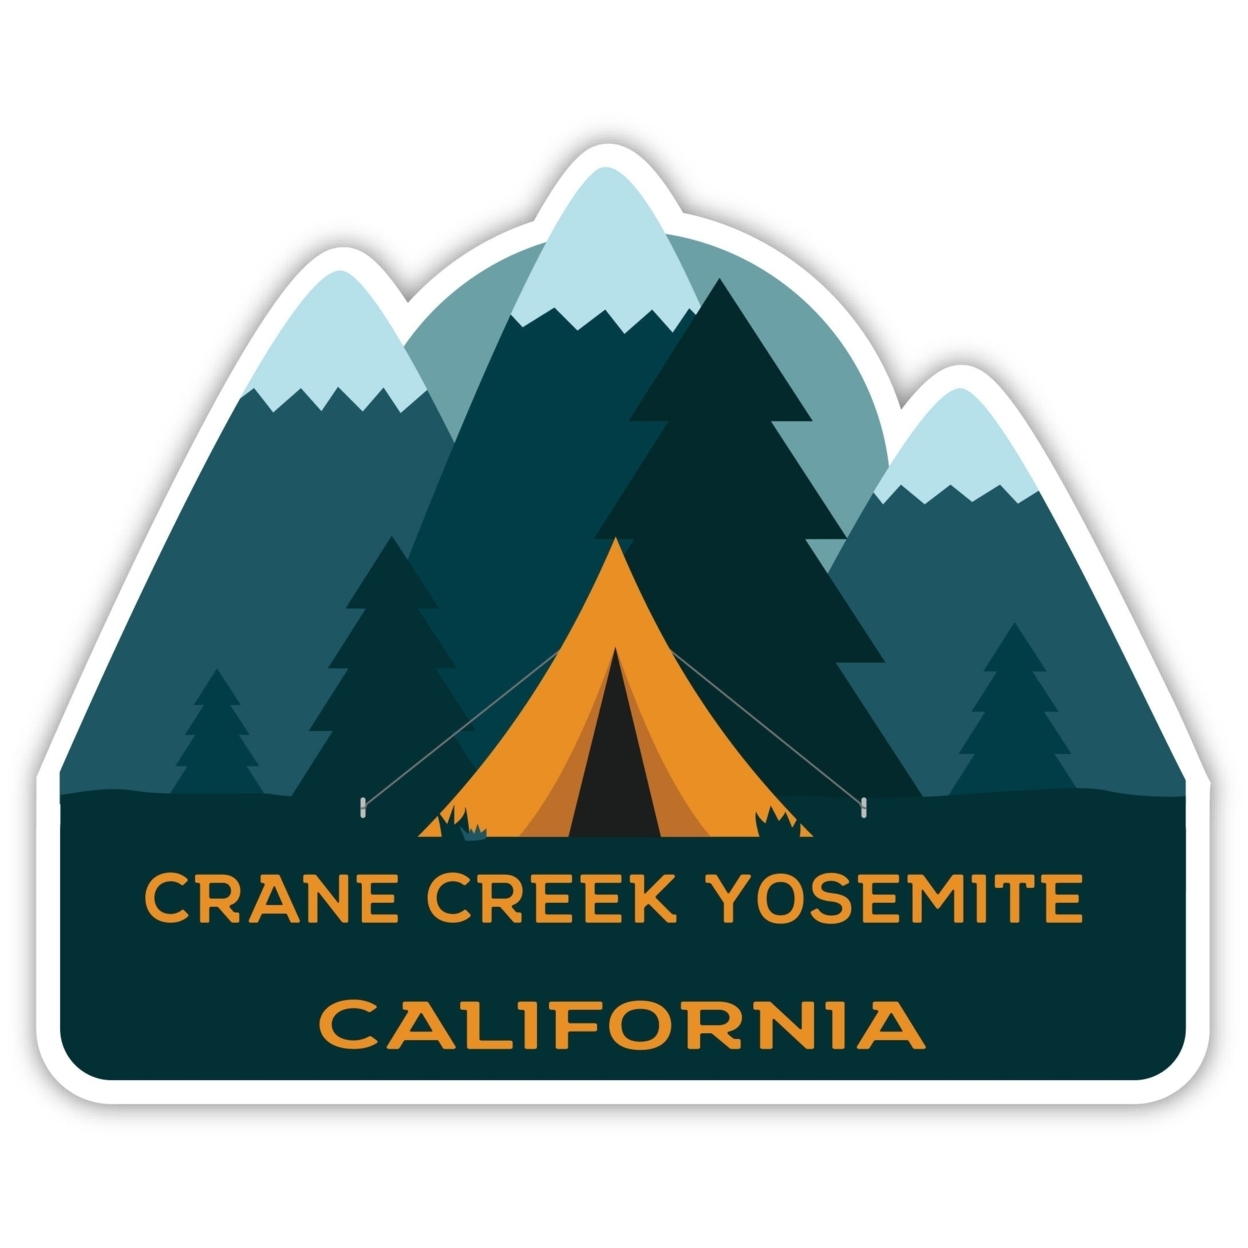 Crane Creek Yosemite California Souvenir Decorative Stickers (Choose Theme And Size) - 4-Pack, 6-Inch, Tent